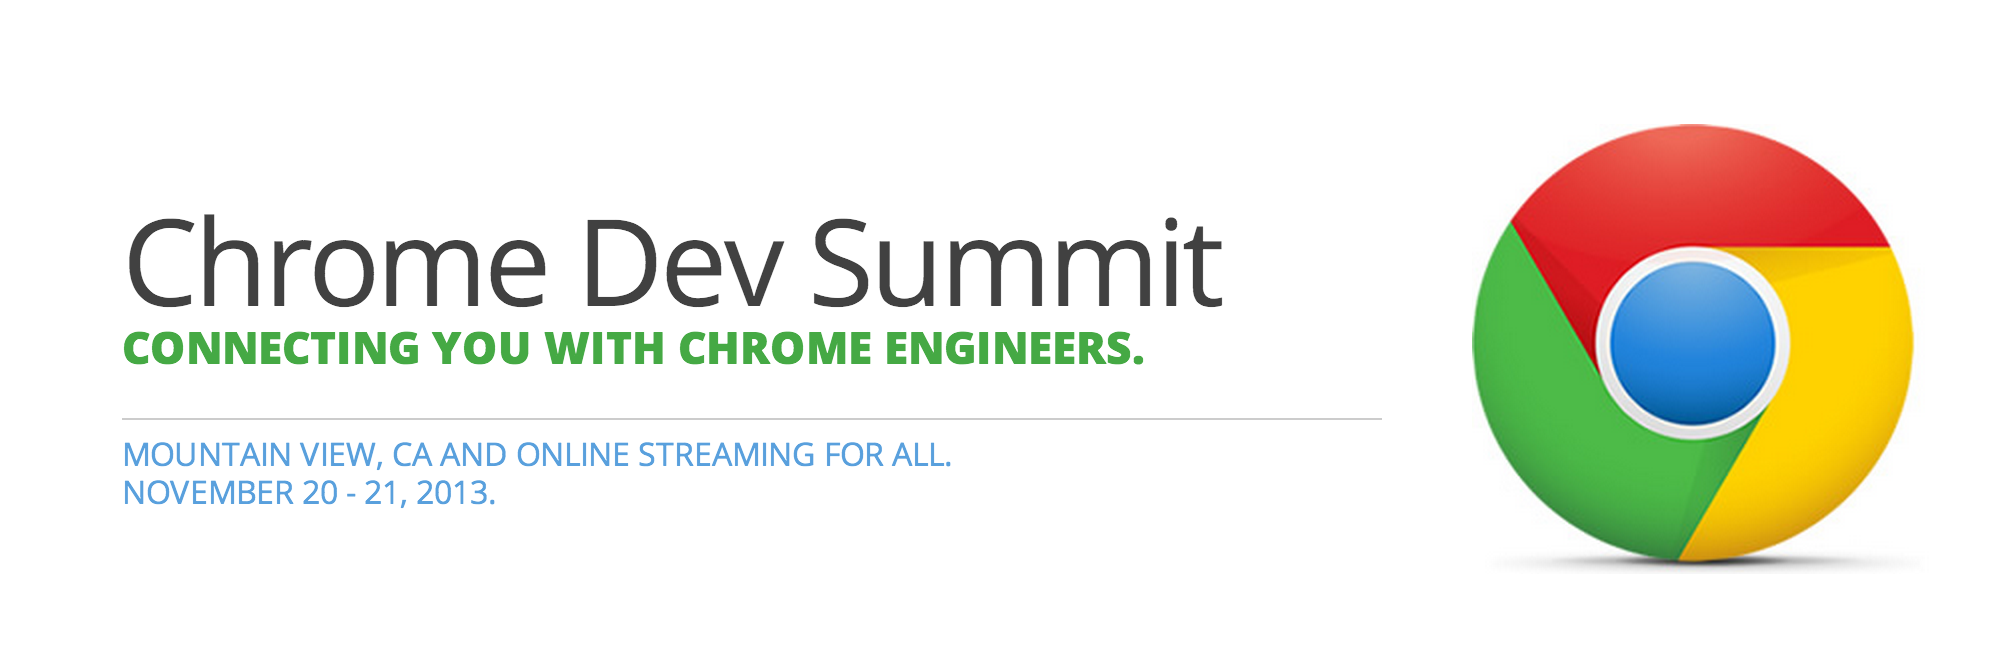 Chrome-Dev-Summit